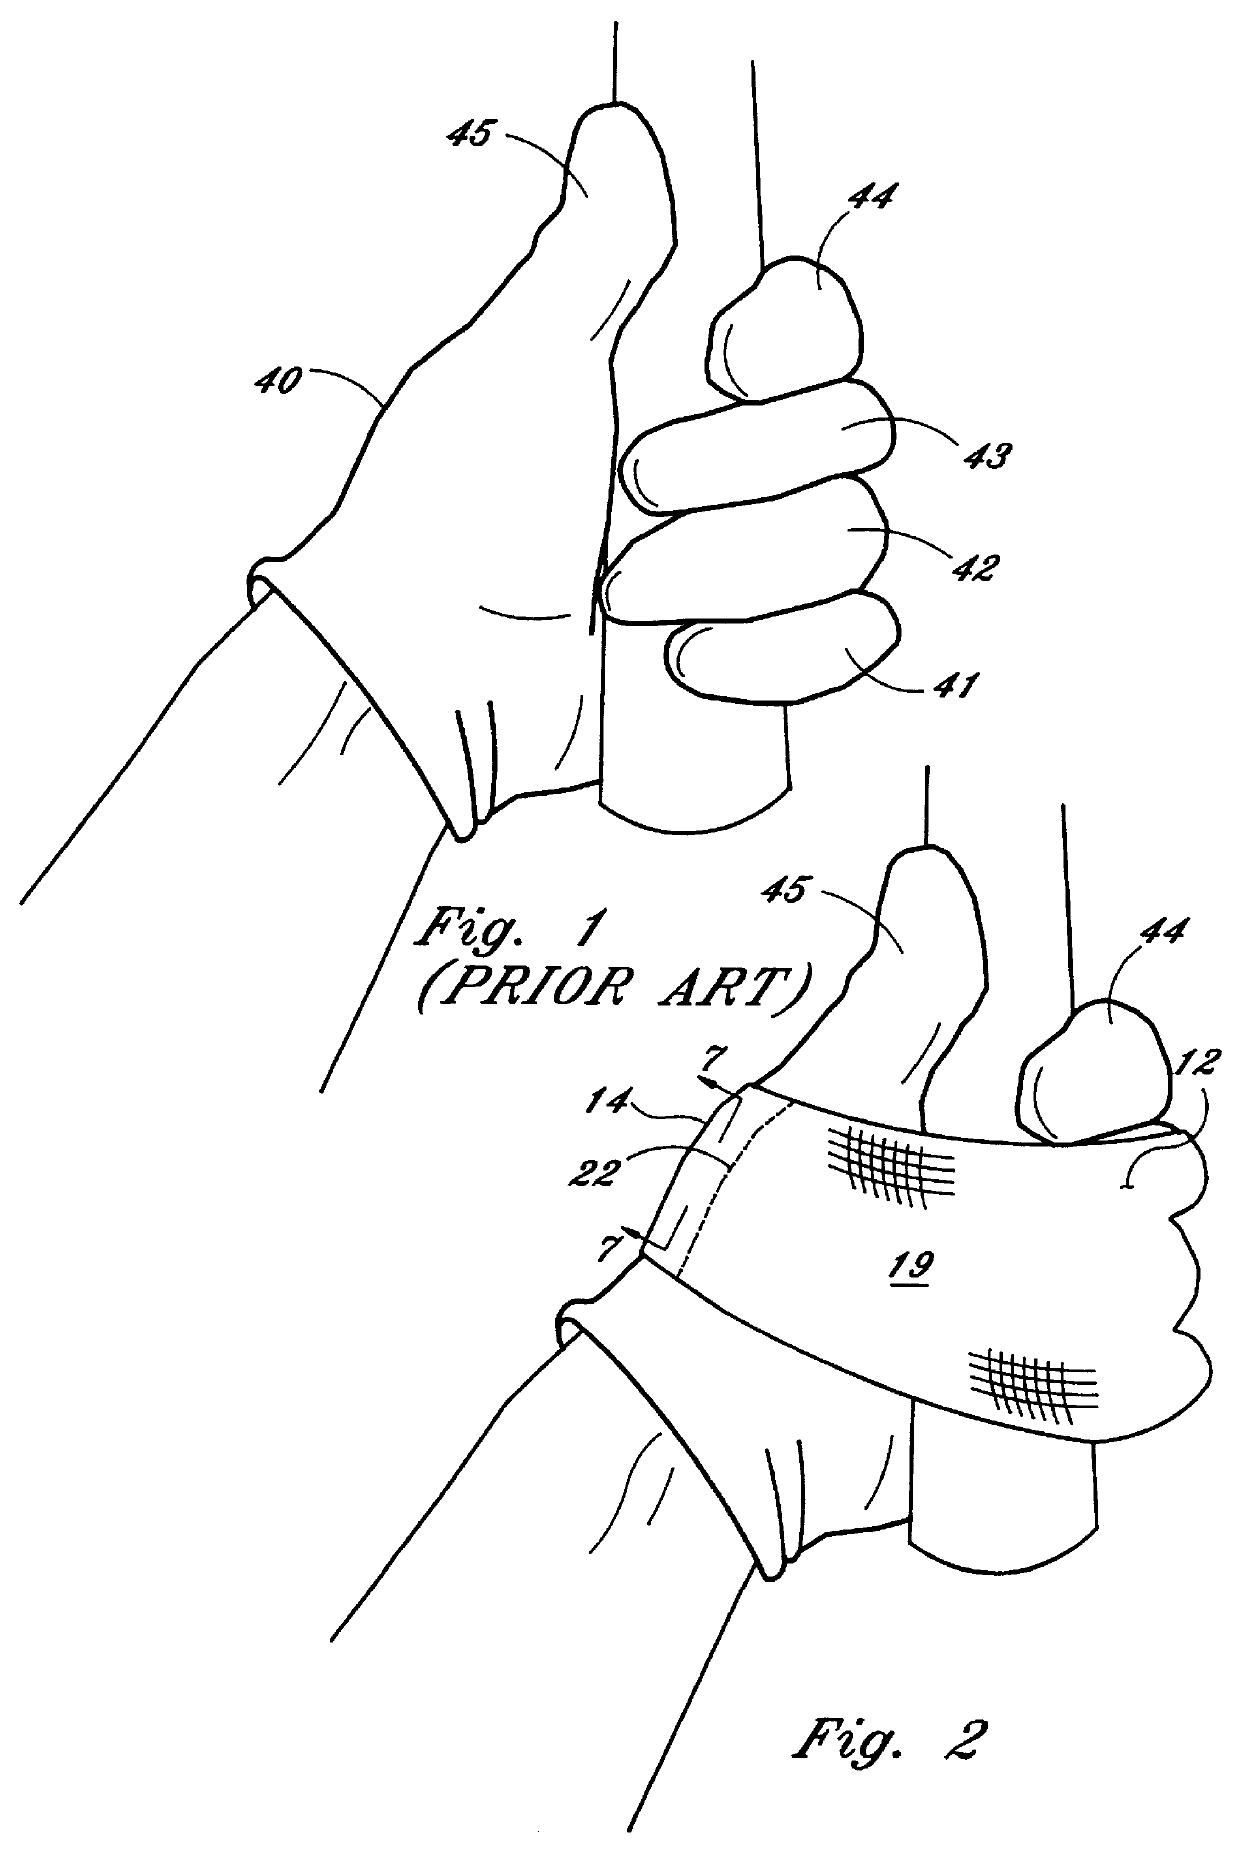 Golf club grip aiding device